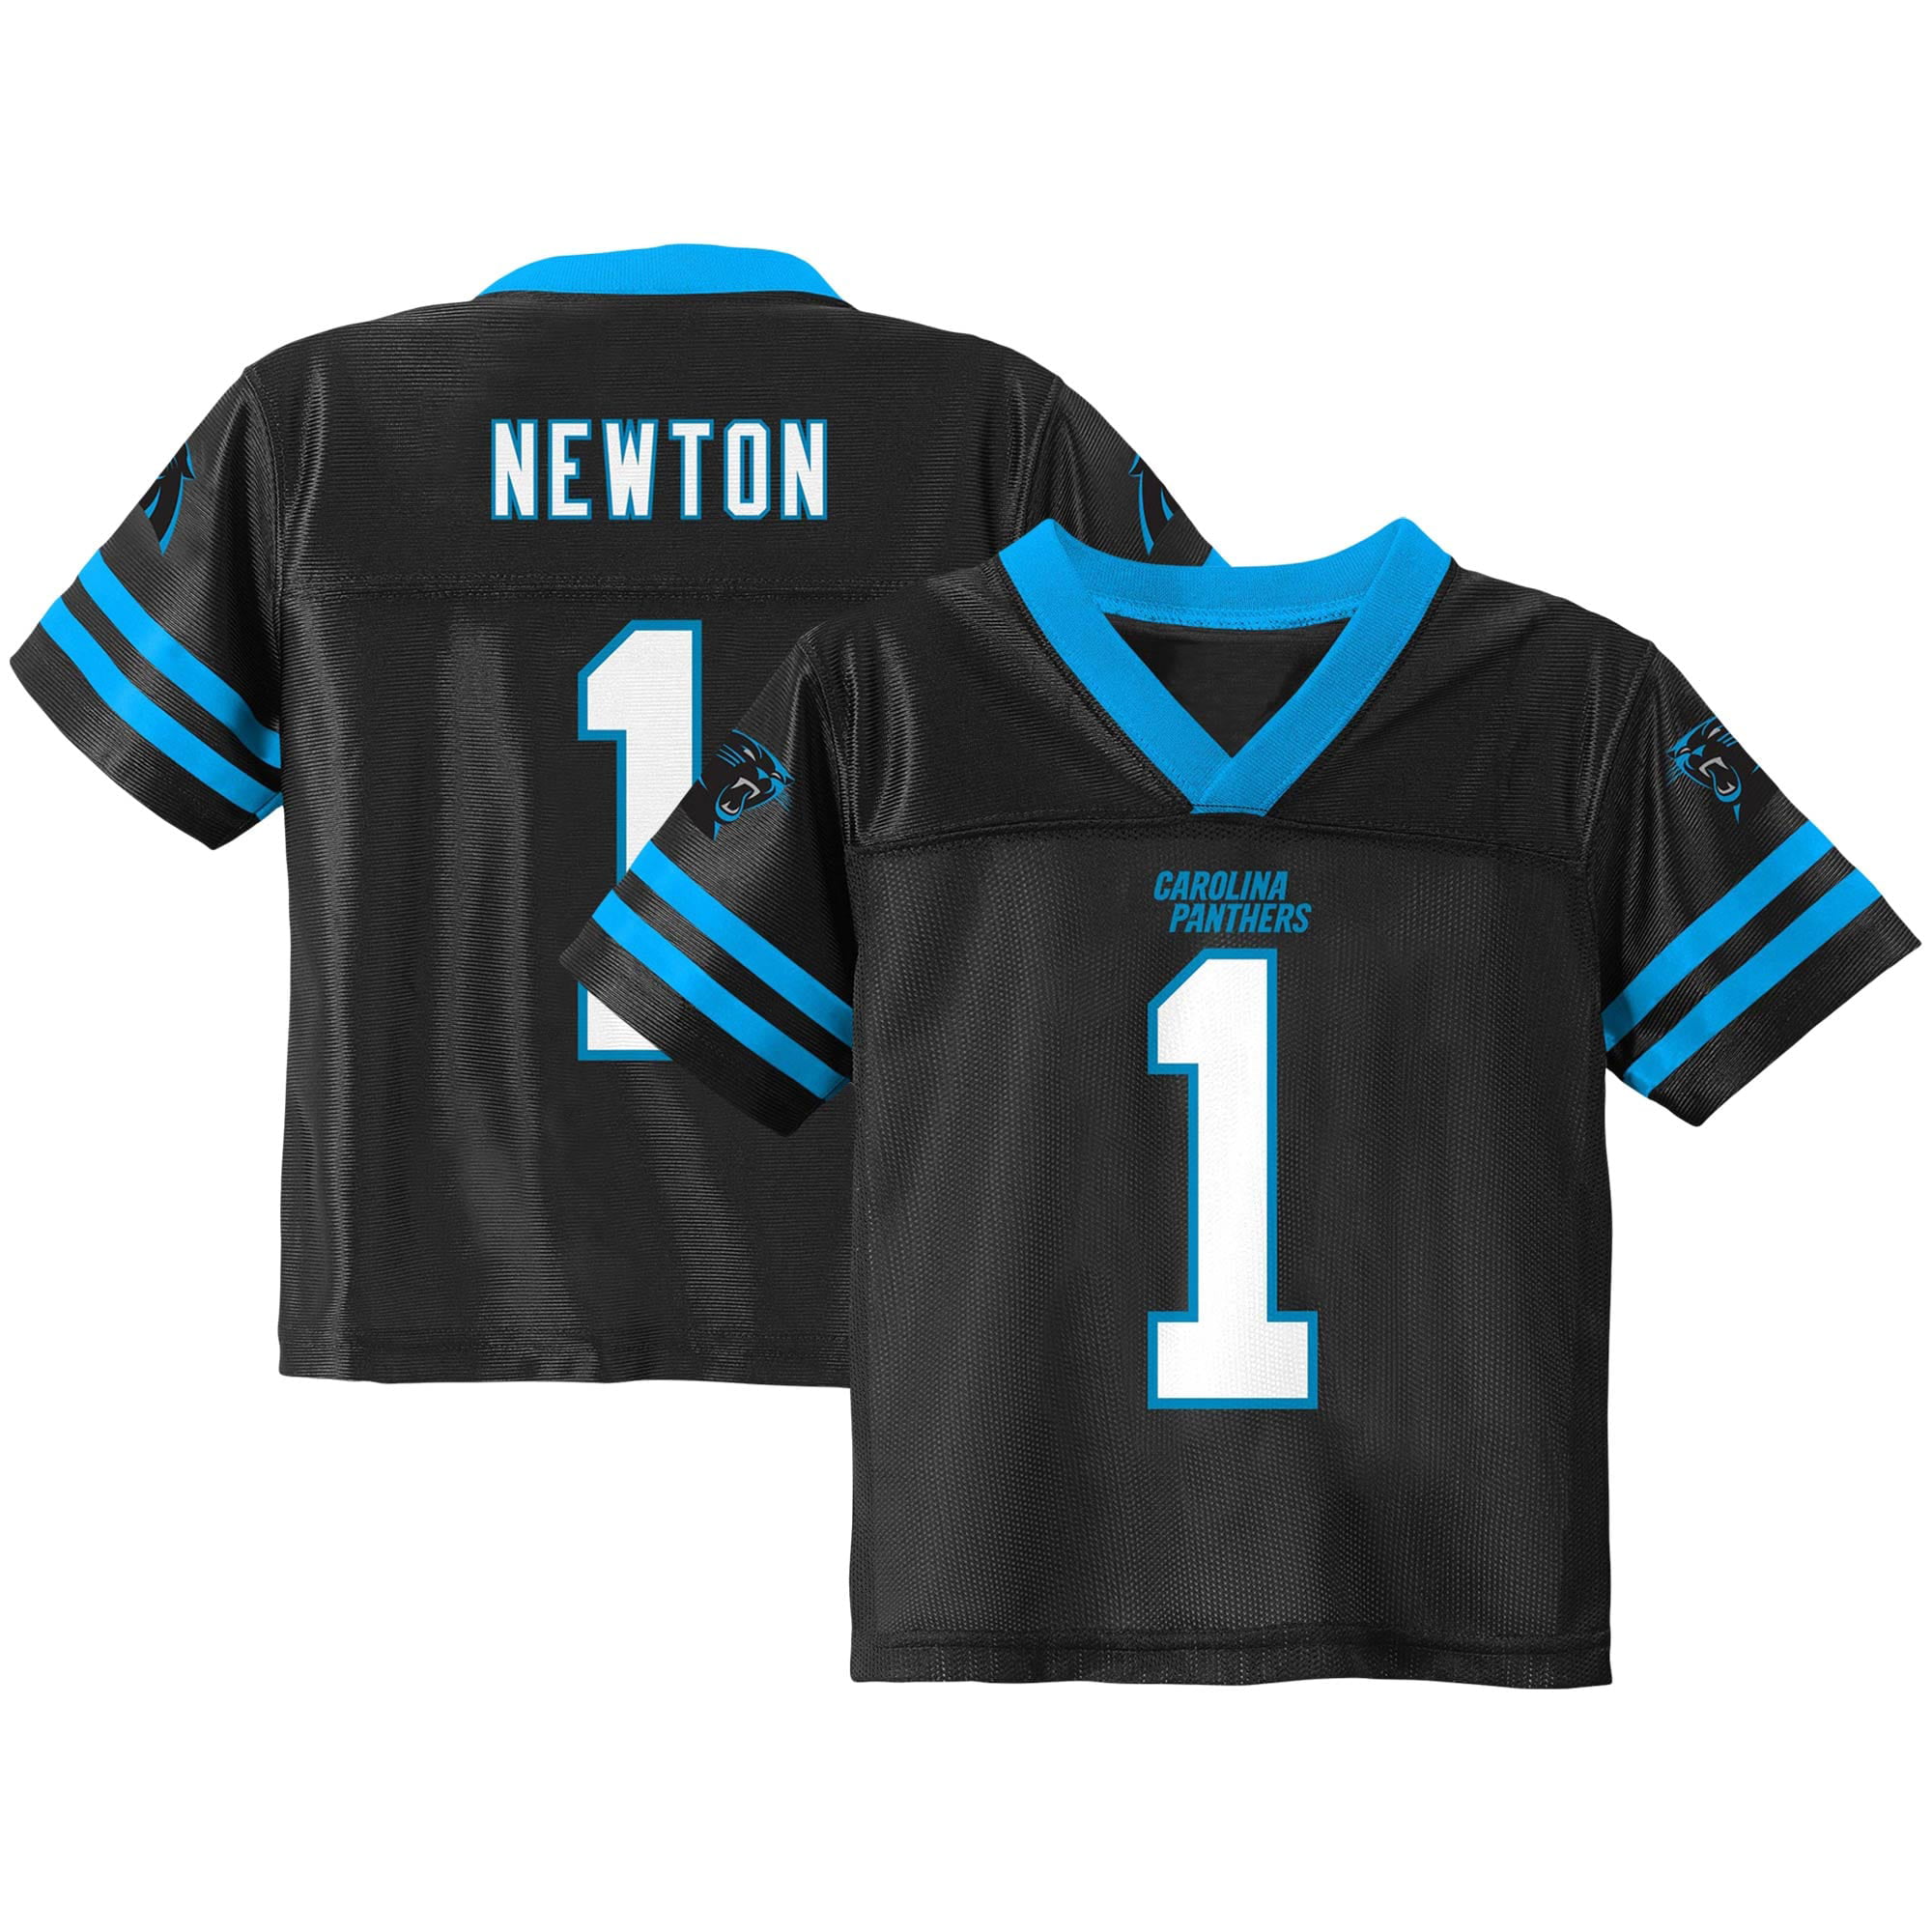 black cam newton jersey